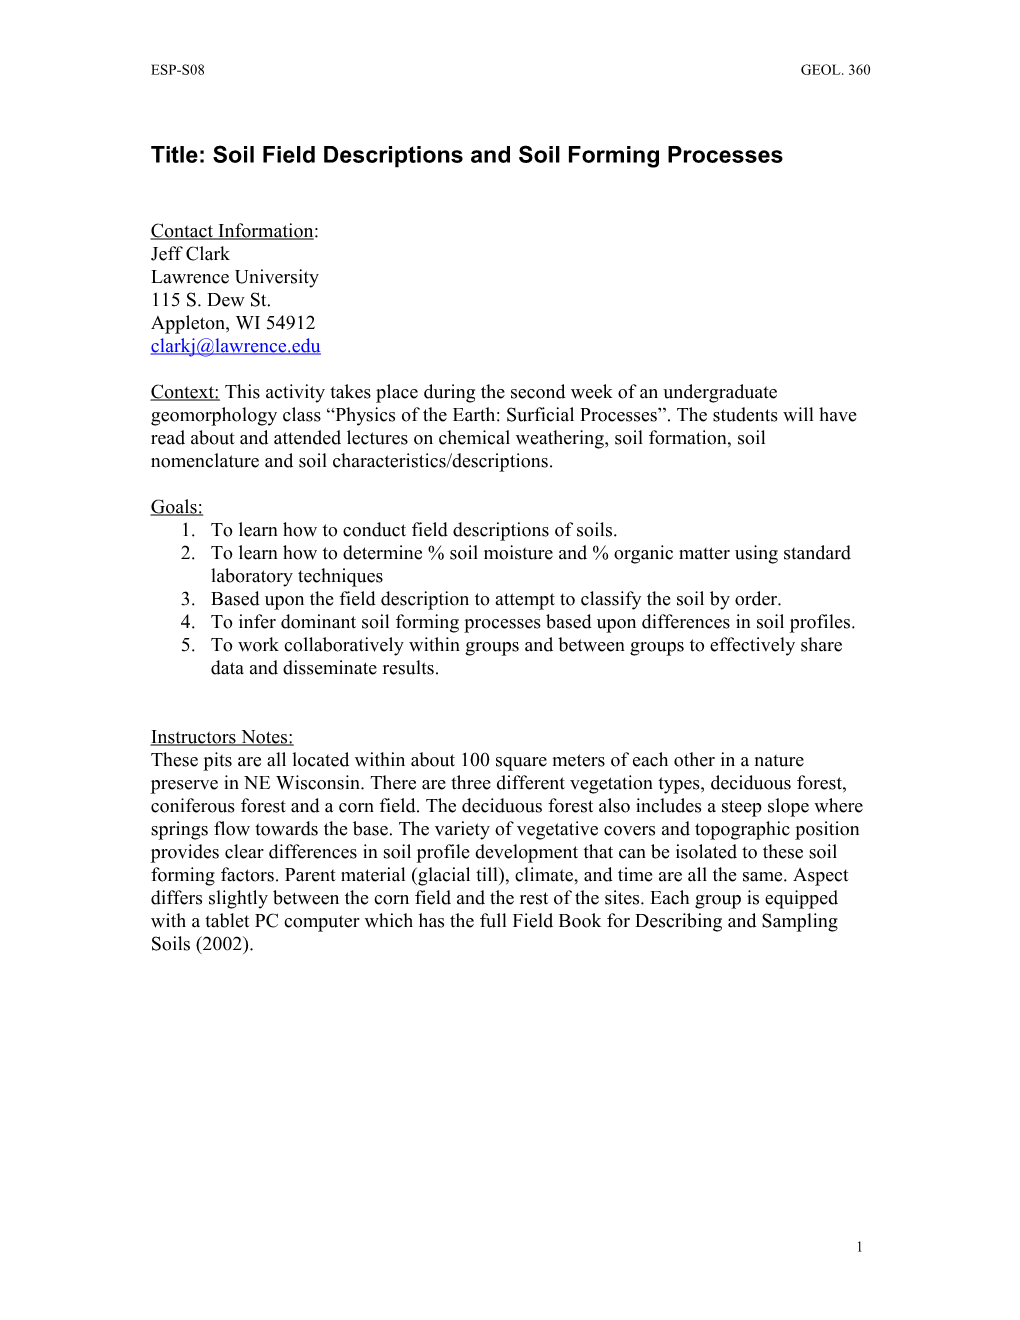 Title: Soil Field Descriptions and Soil Forming Processes